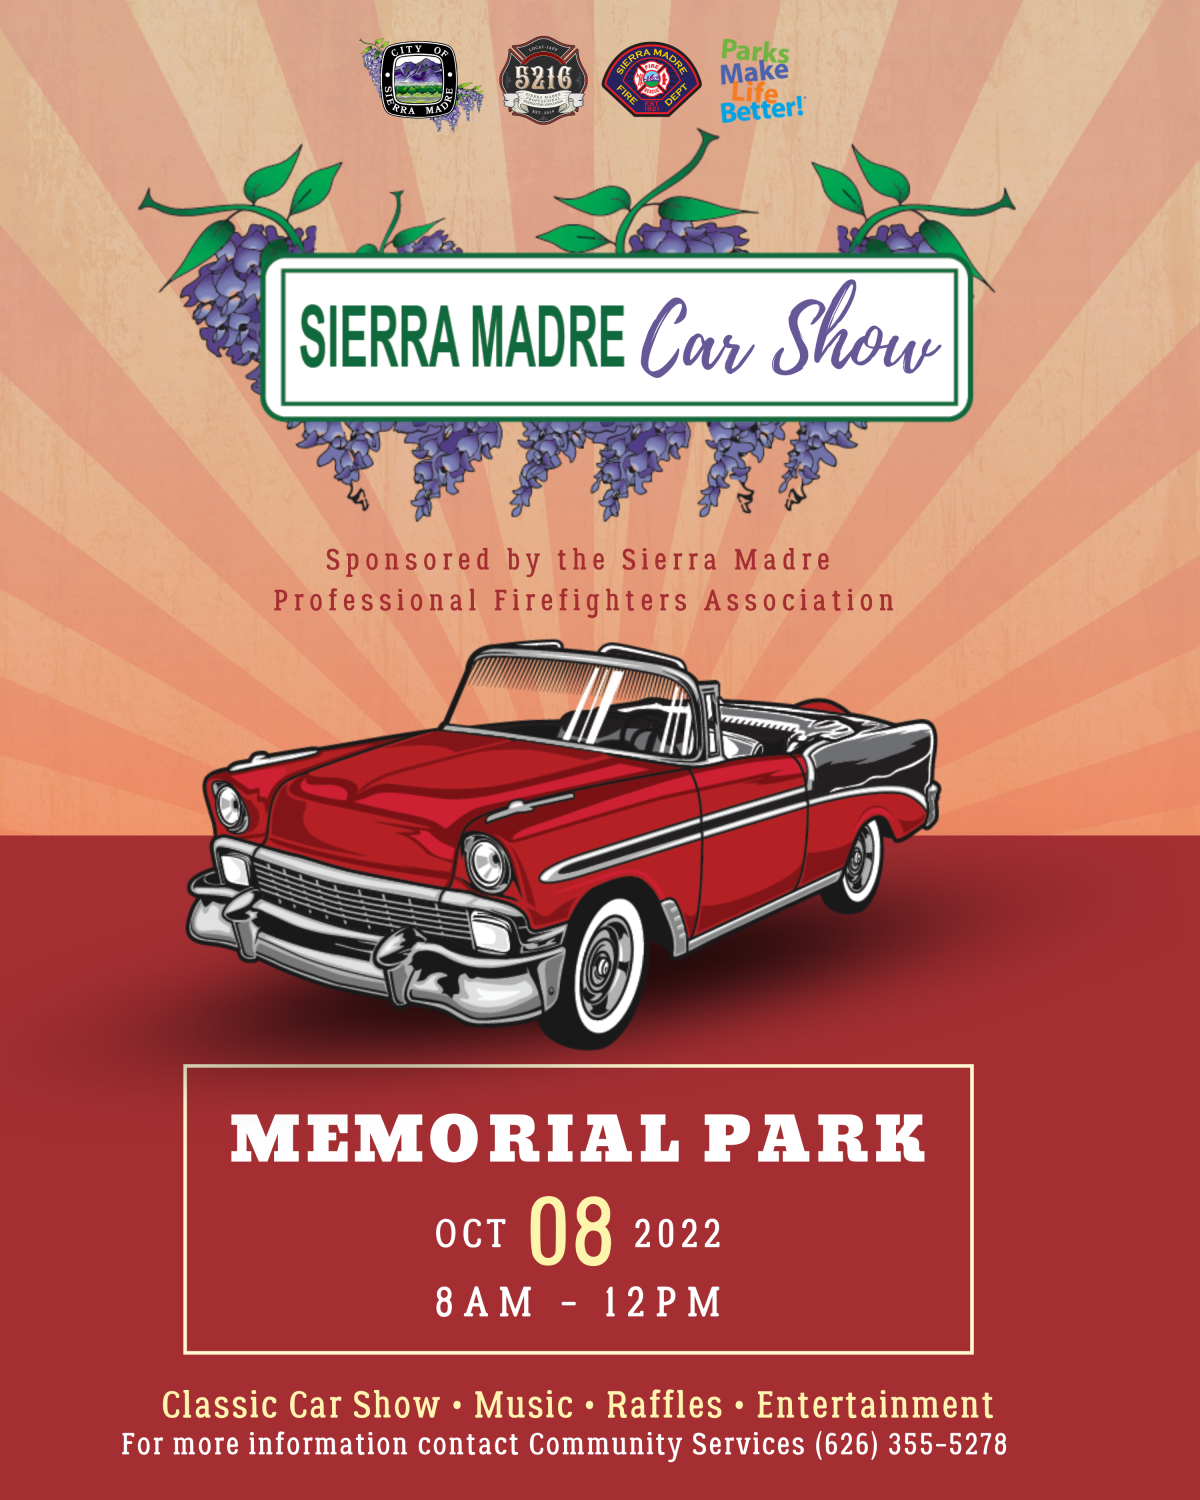 Sierra Madre Car Show Returns! Sierra Madre Firefighters